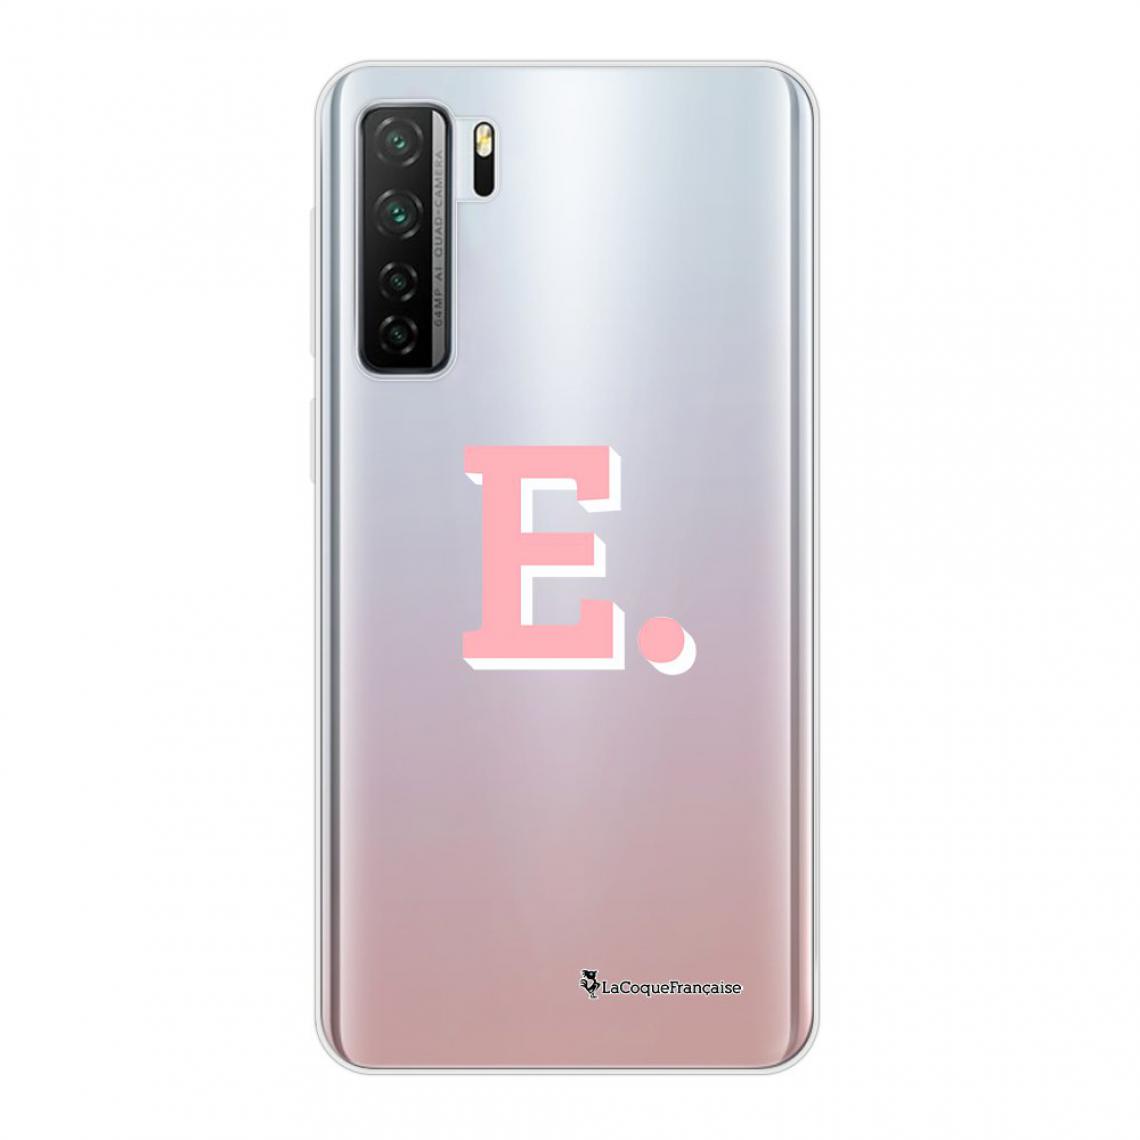 La Coque Francaise - Coque Huawei P40 Lite 5G souple silicone transparente - Coque, étui smartphone